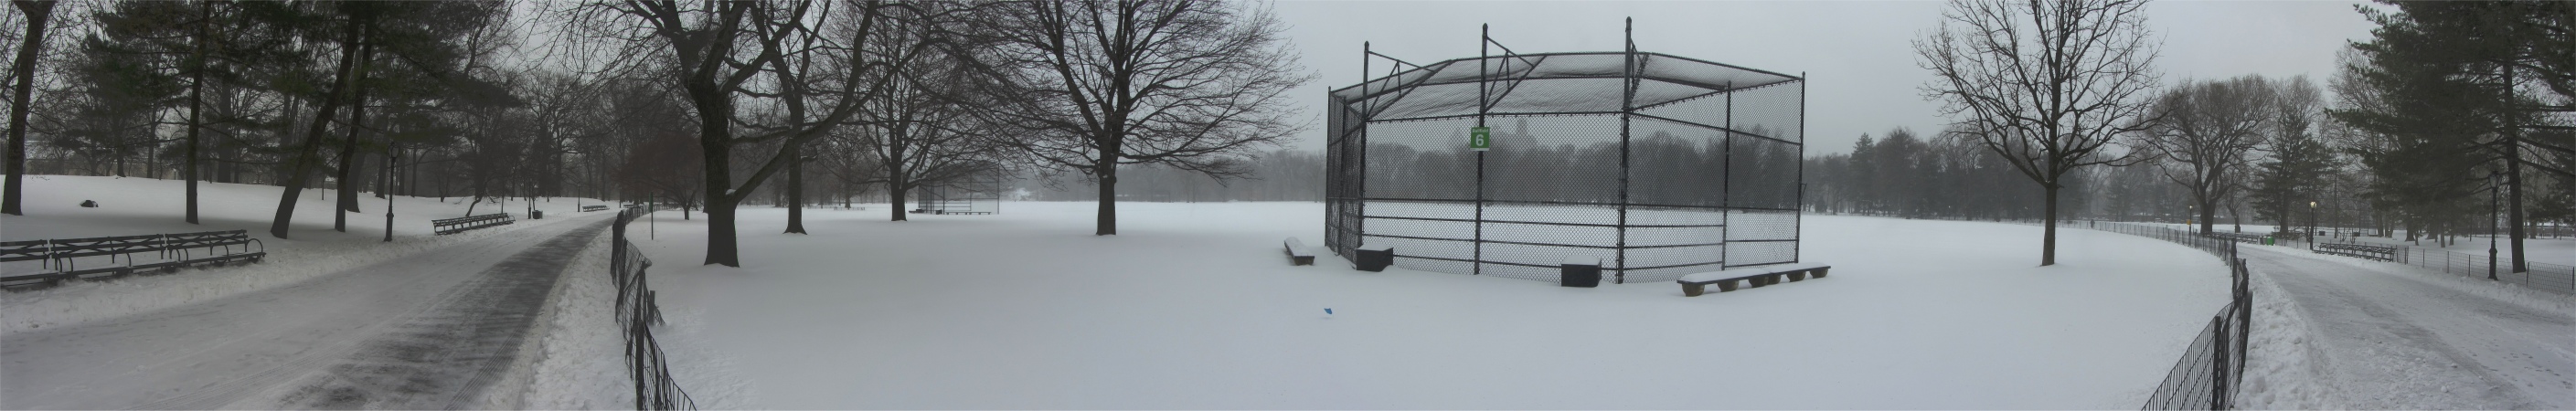 central_park_under_snow